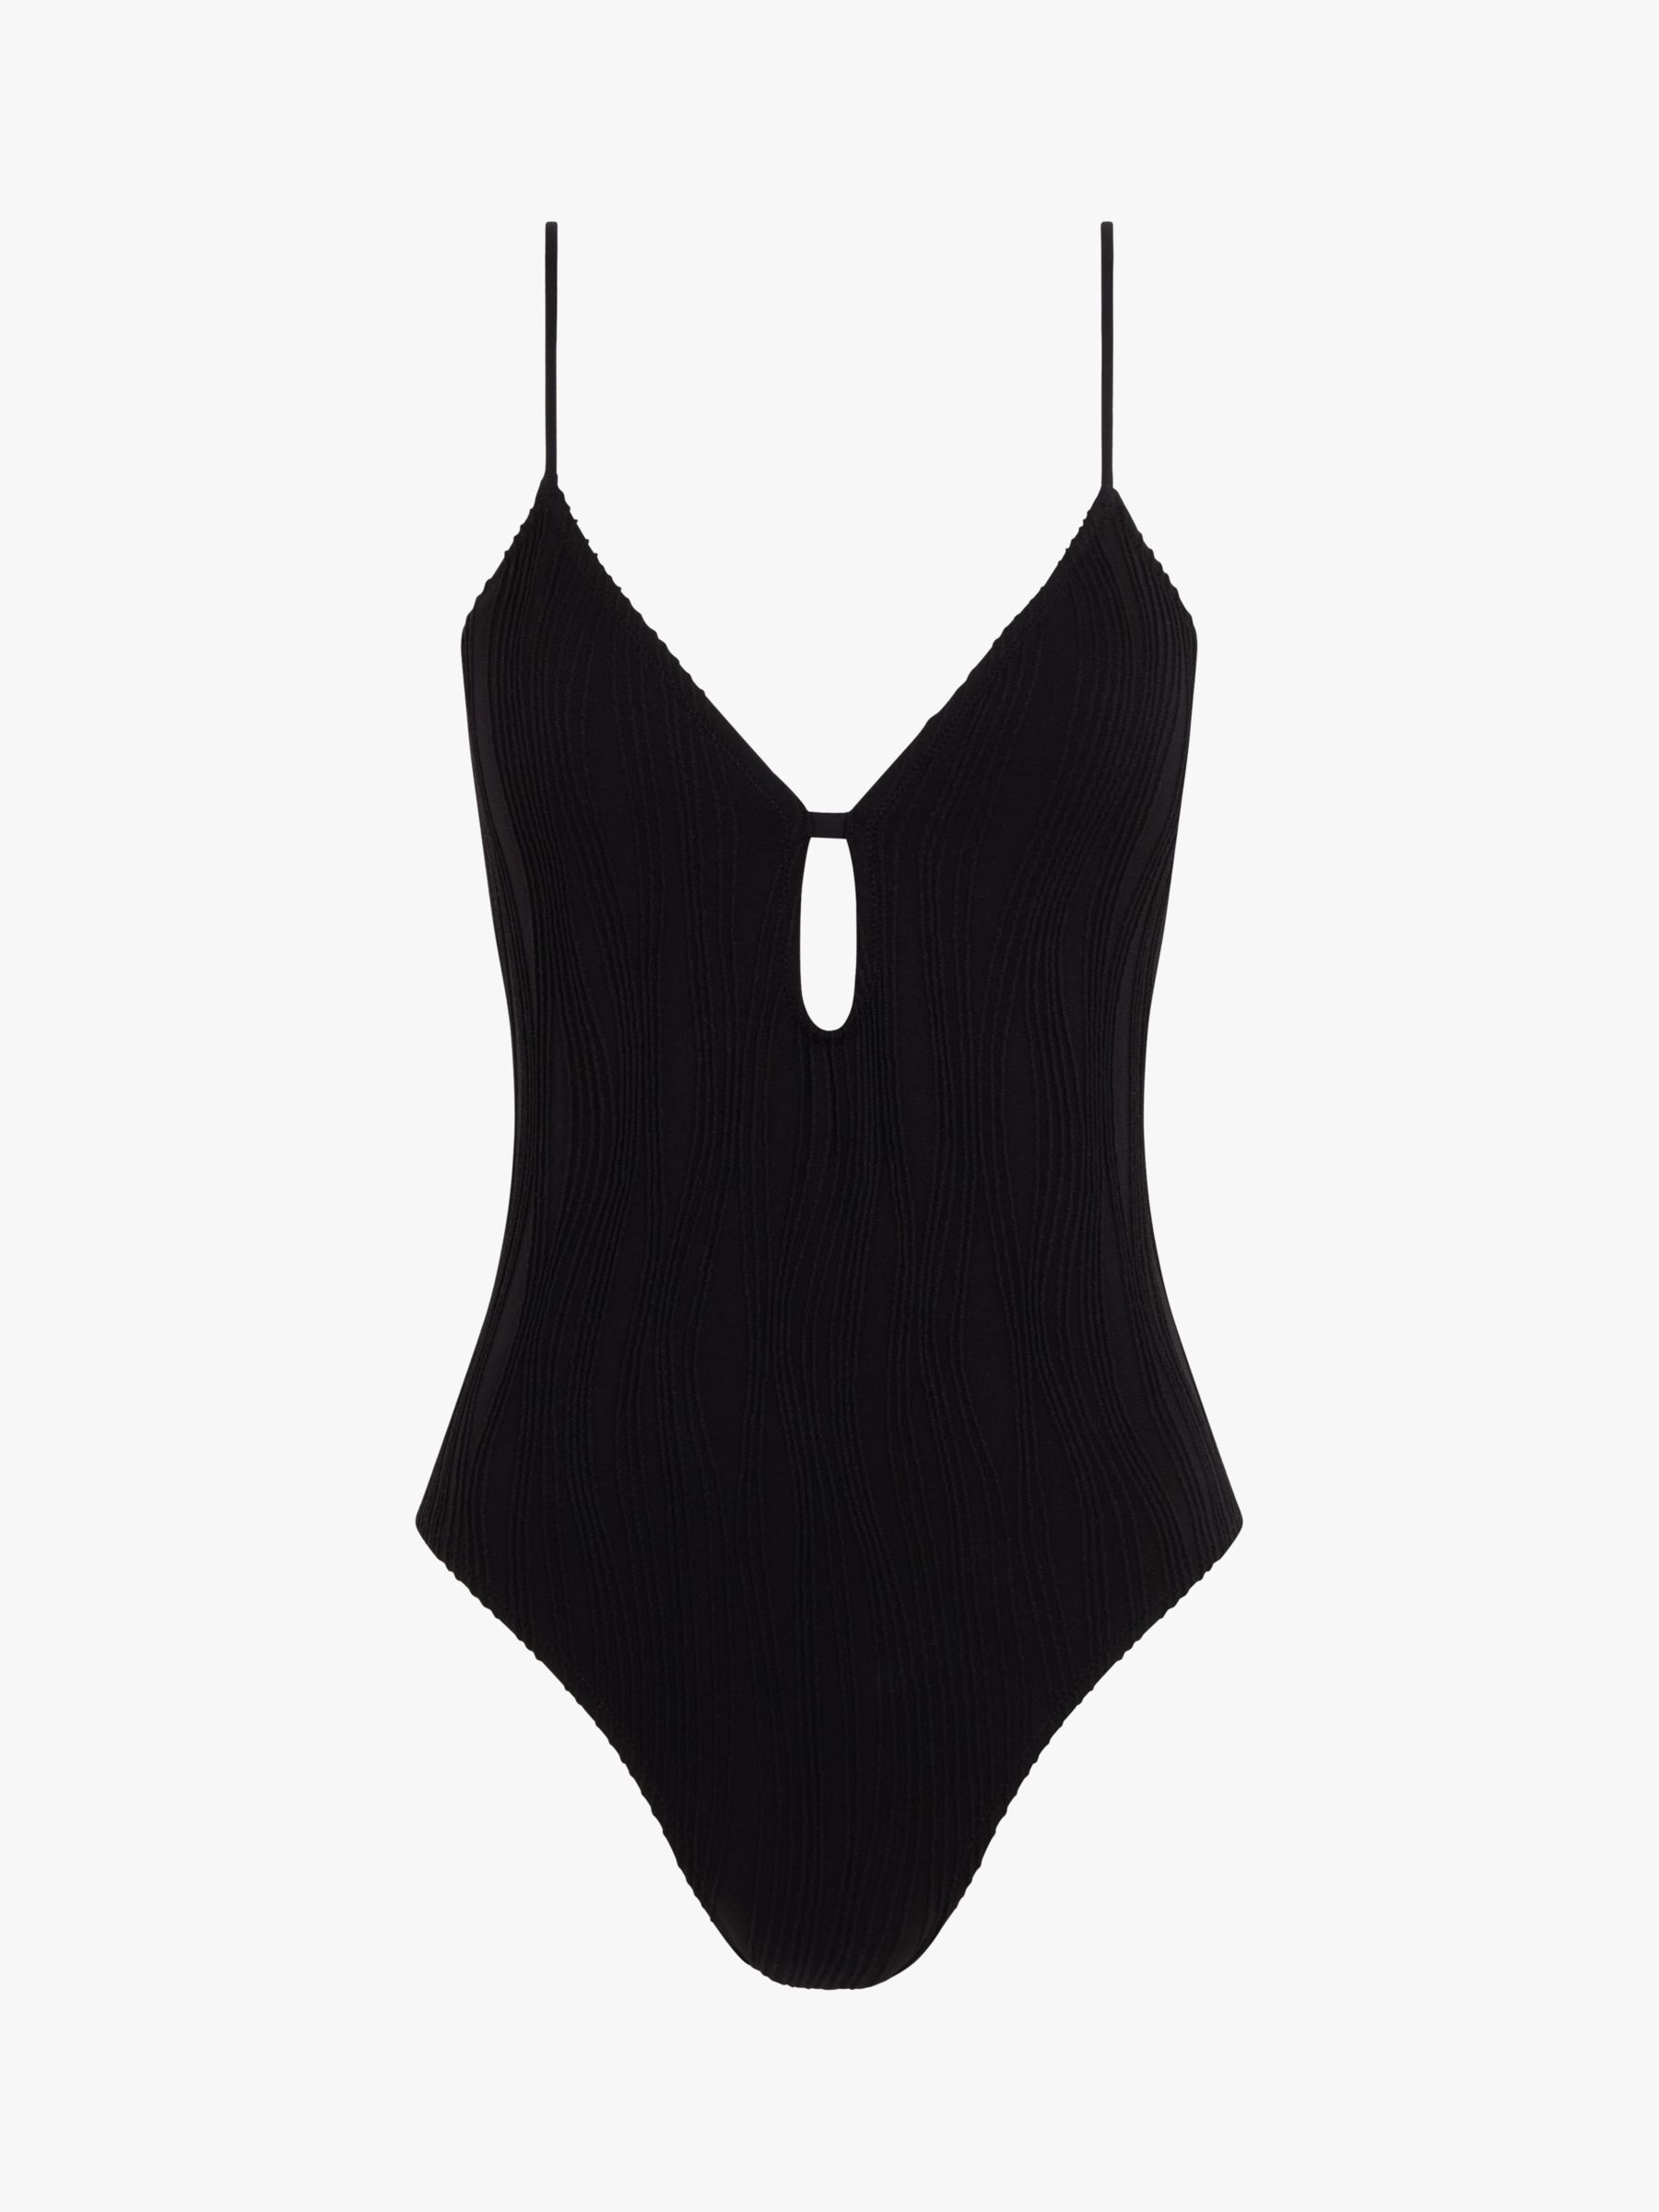 Chantelle Pulp Plunge Neck Textured Swimsuit, Black, S-M